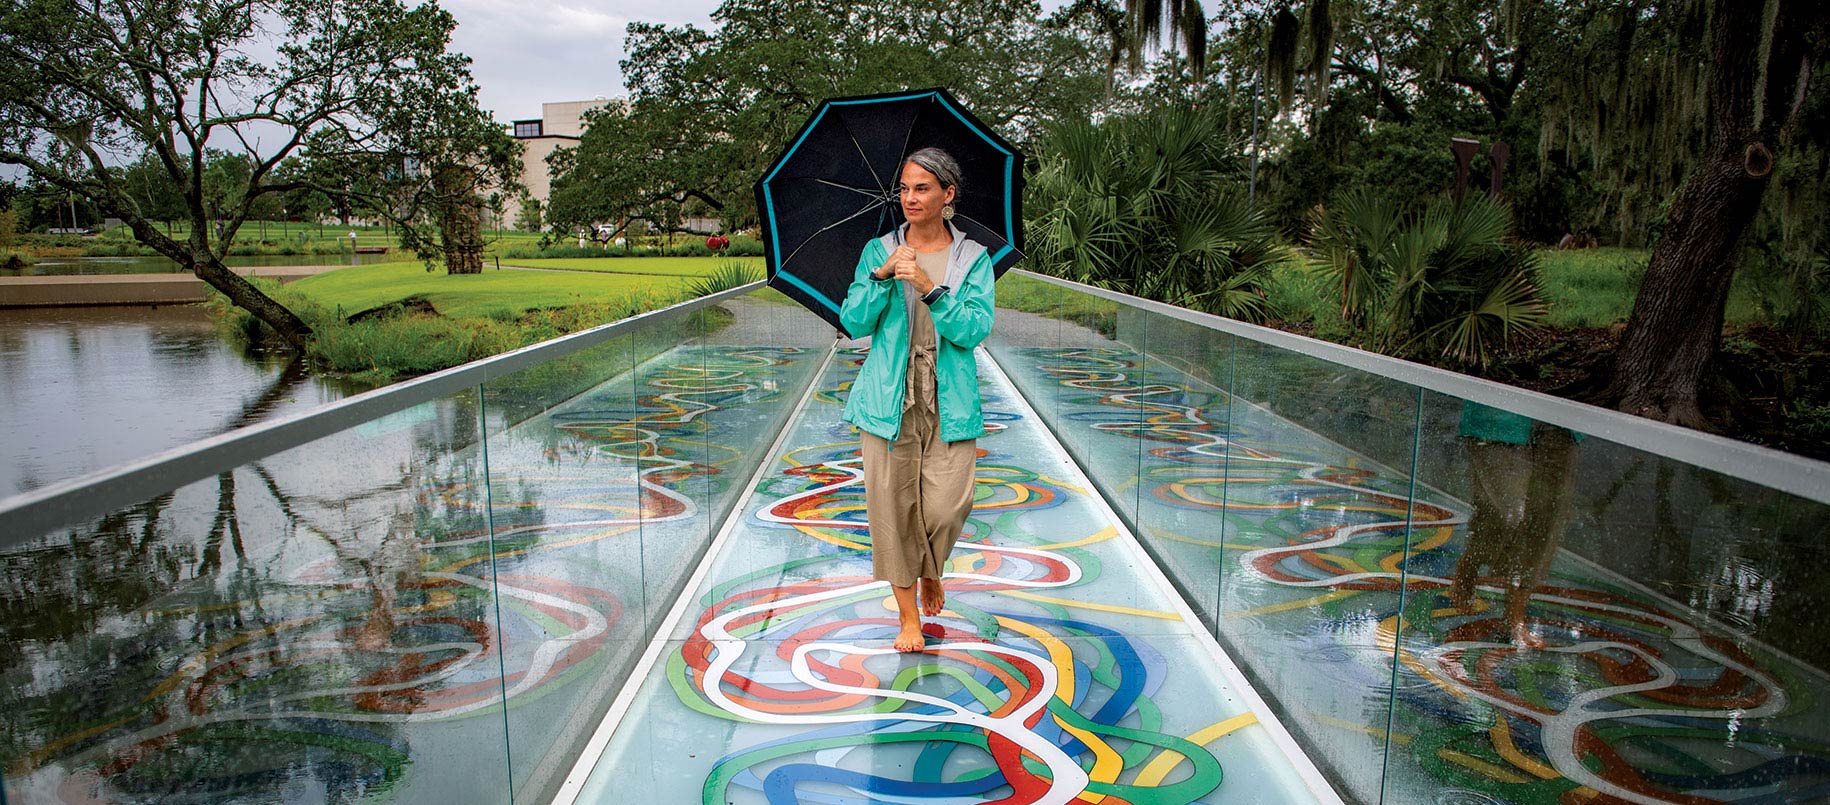 NOCGS director Rebecca Snedeker walks along artist Elyn Zimmermans installation Mississippi Meanders